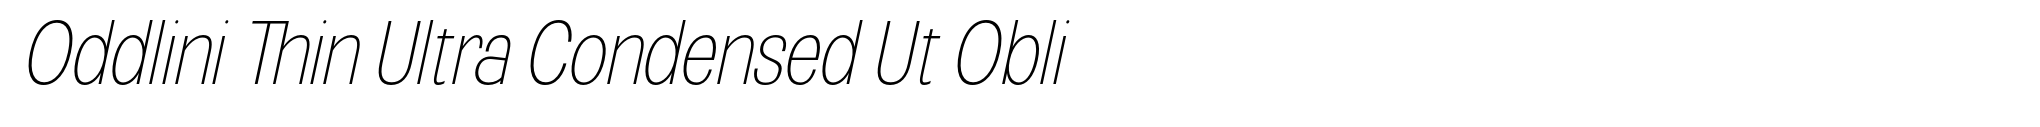 Oddlini Thin Ultra Condensed Ut Obli image